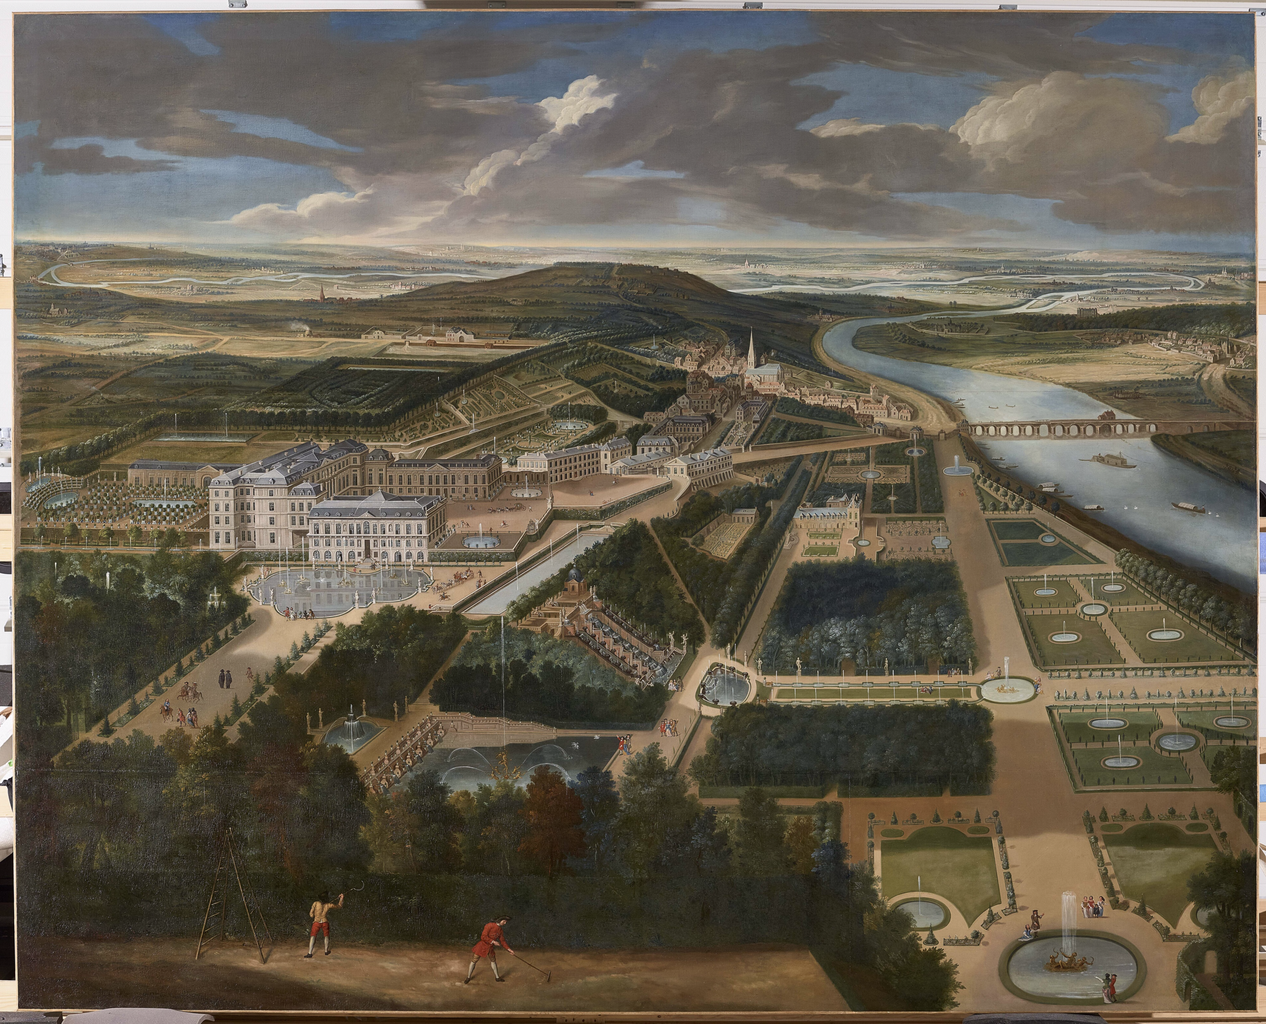 File:Marriott's Grand Chateau.jpg - Wikimedia Commons